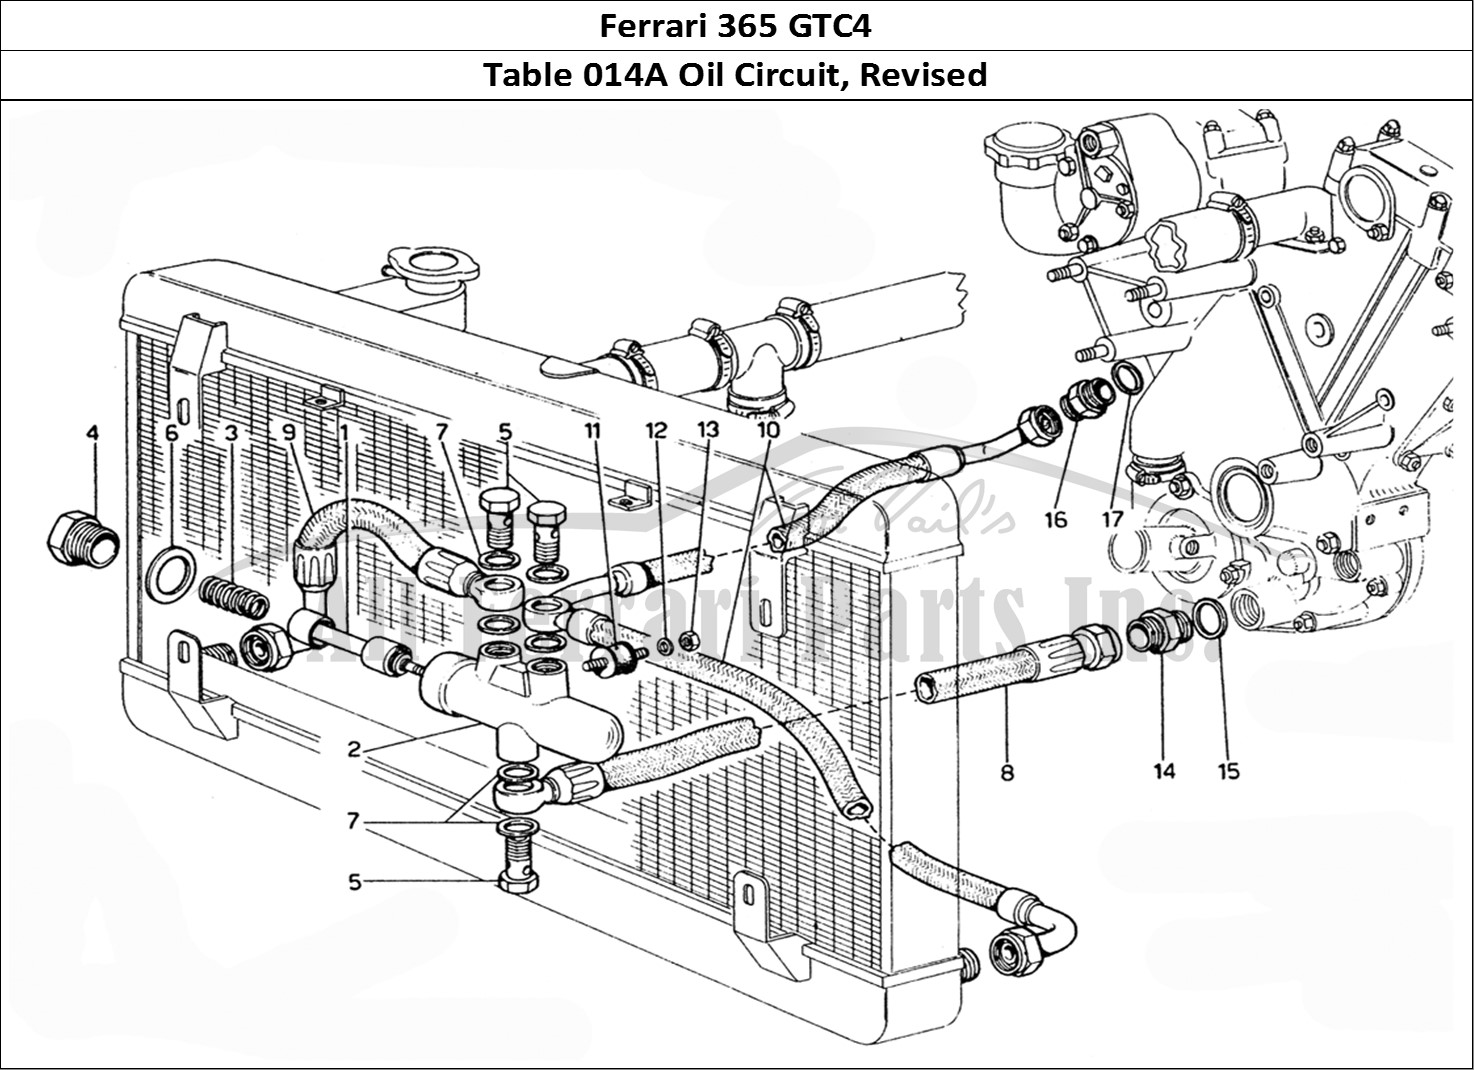 Ferrari Parts Ferrari 365 GTC4 (Mechanical) Page 014 Oil Circuit - Revision